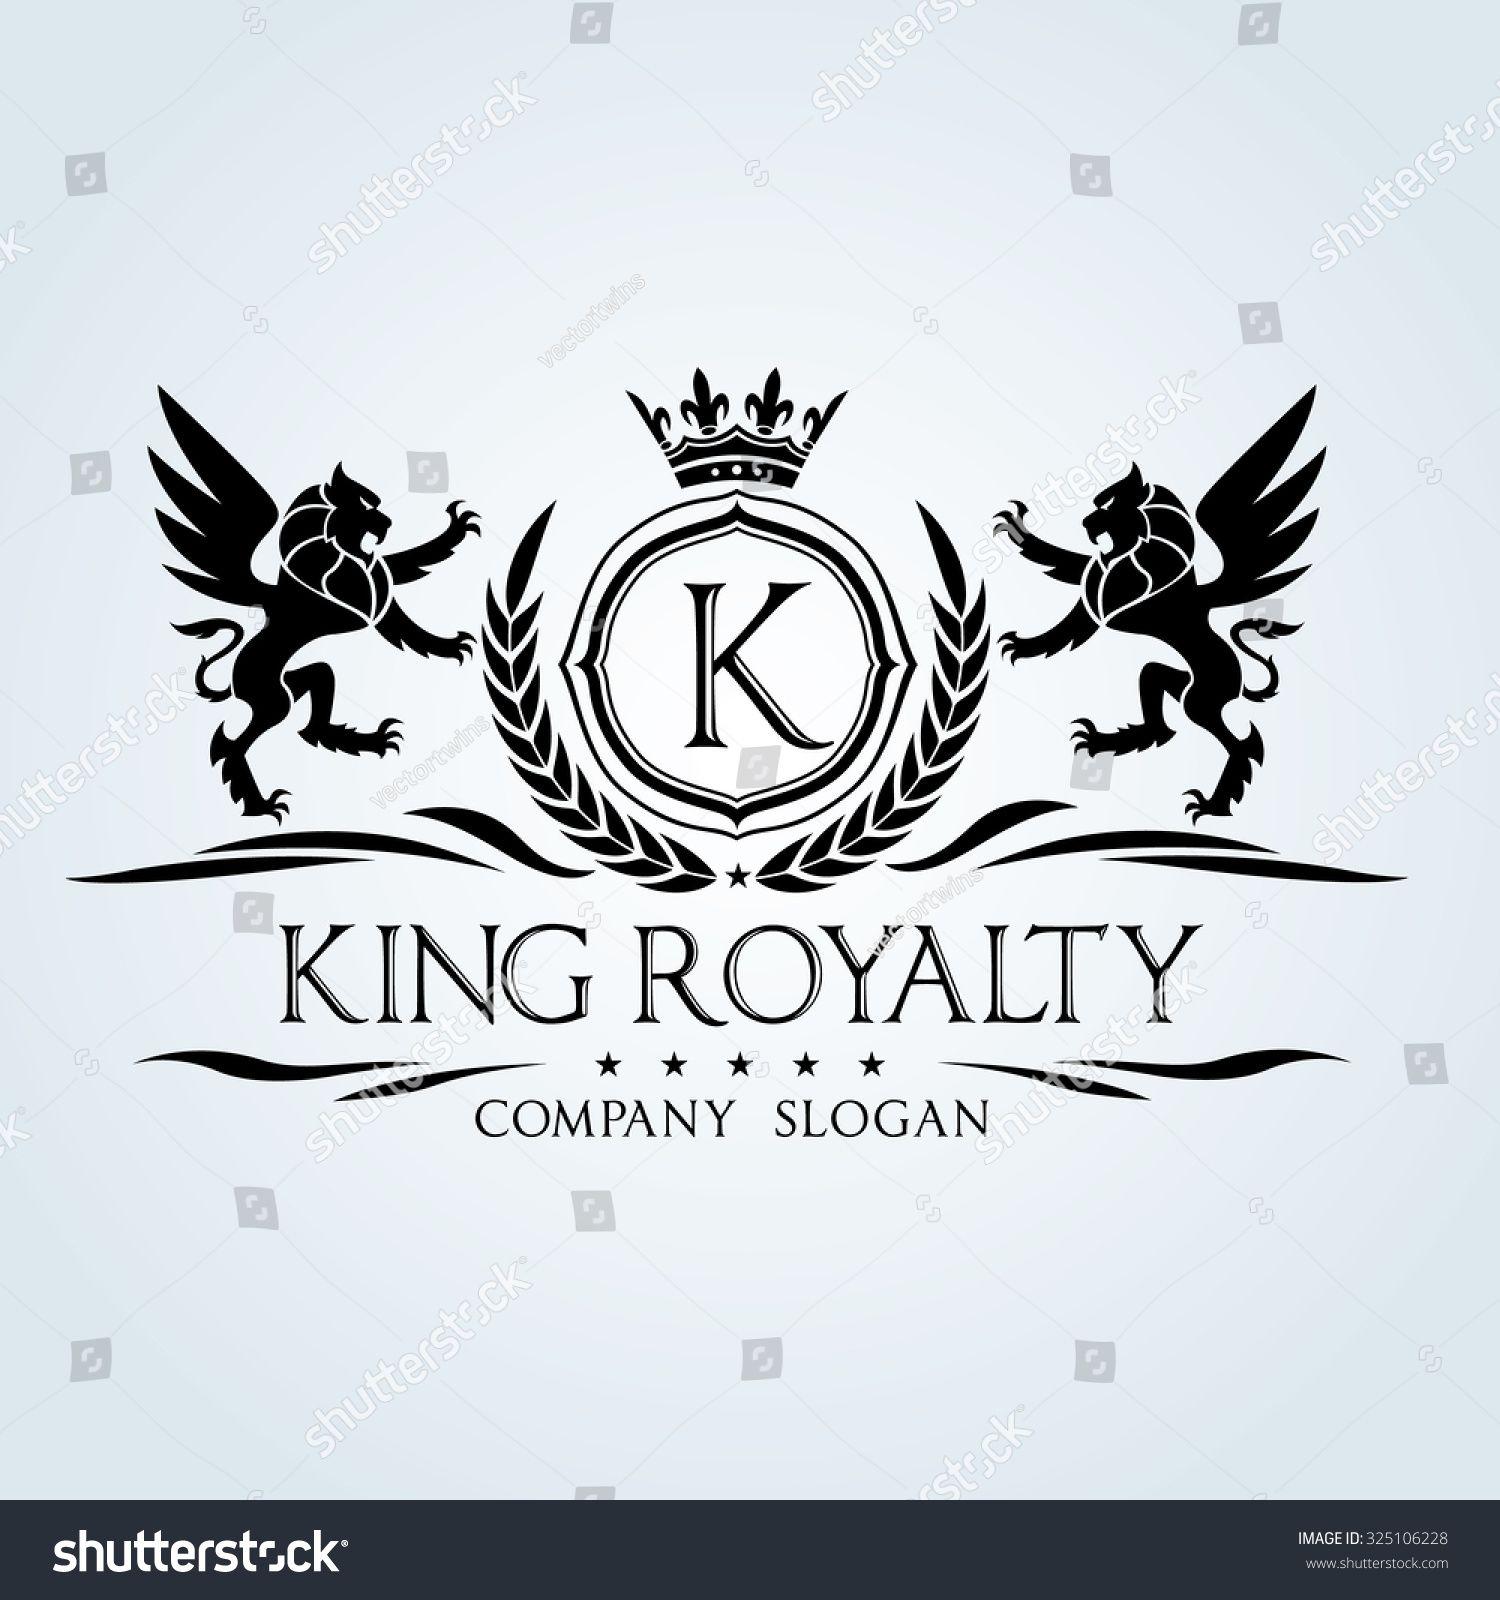 Royalty Logo - King Royalty, boutique brand, real estate, property, royalty, crown logo